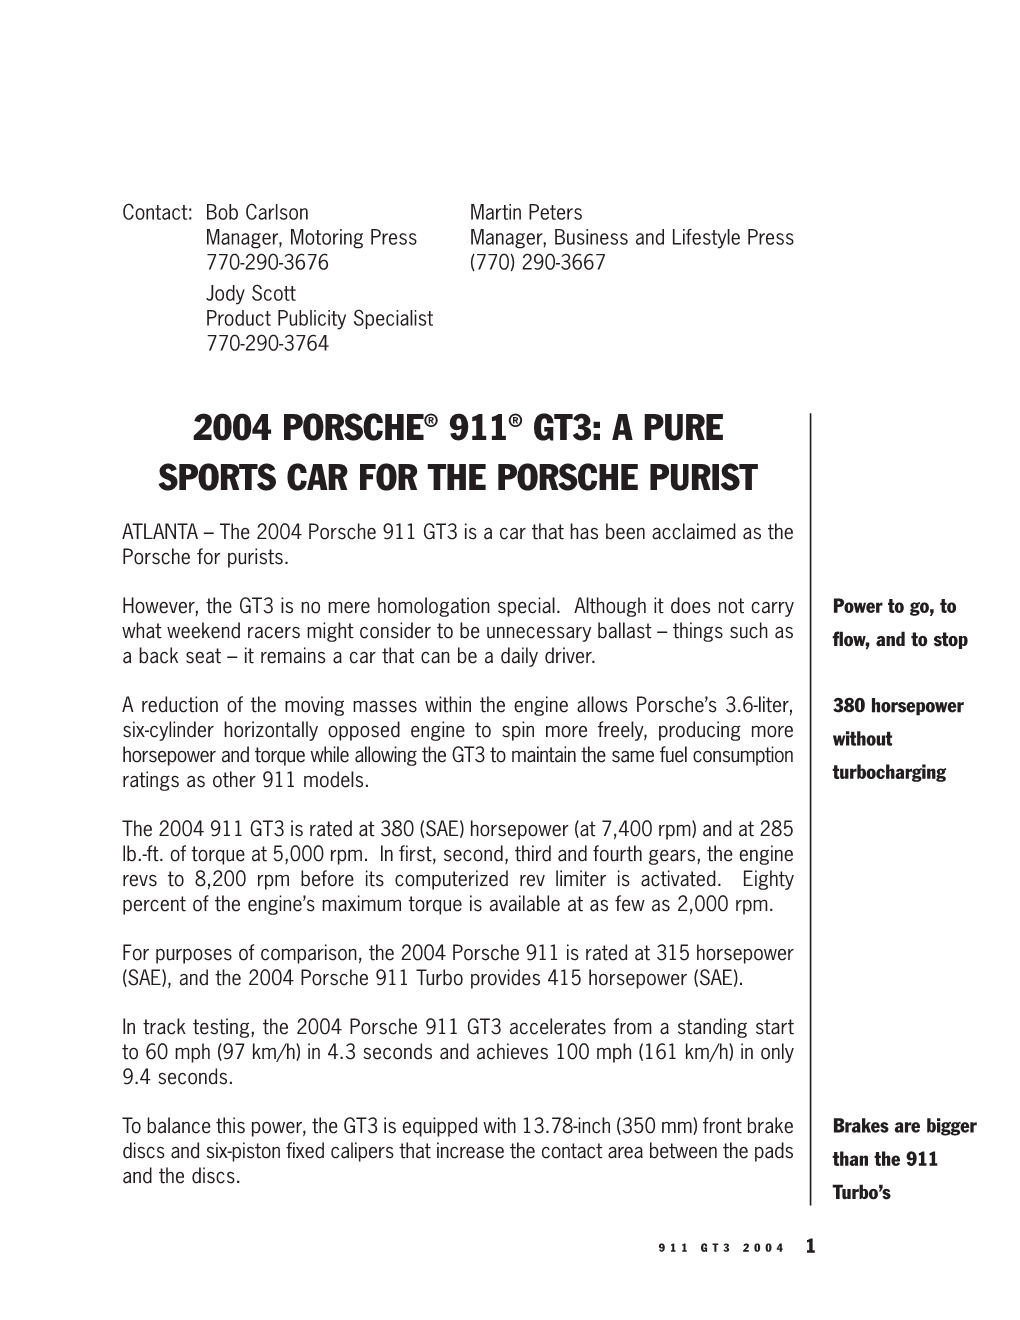 2004 Porsche® 911® Gt3: a Pure Sports Car for the Porsche Purist